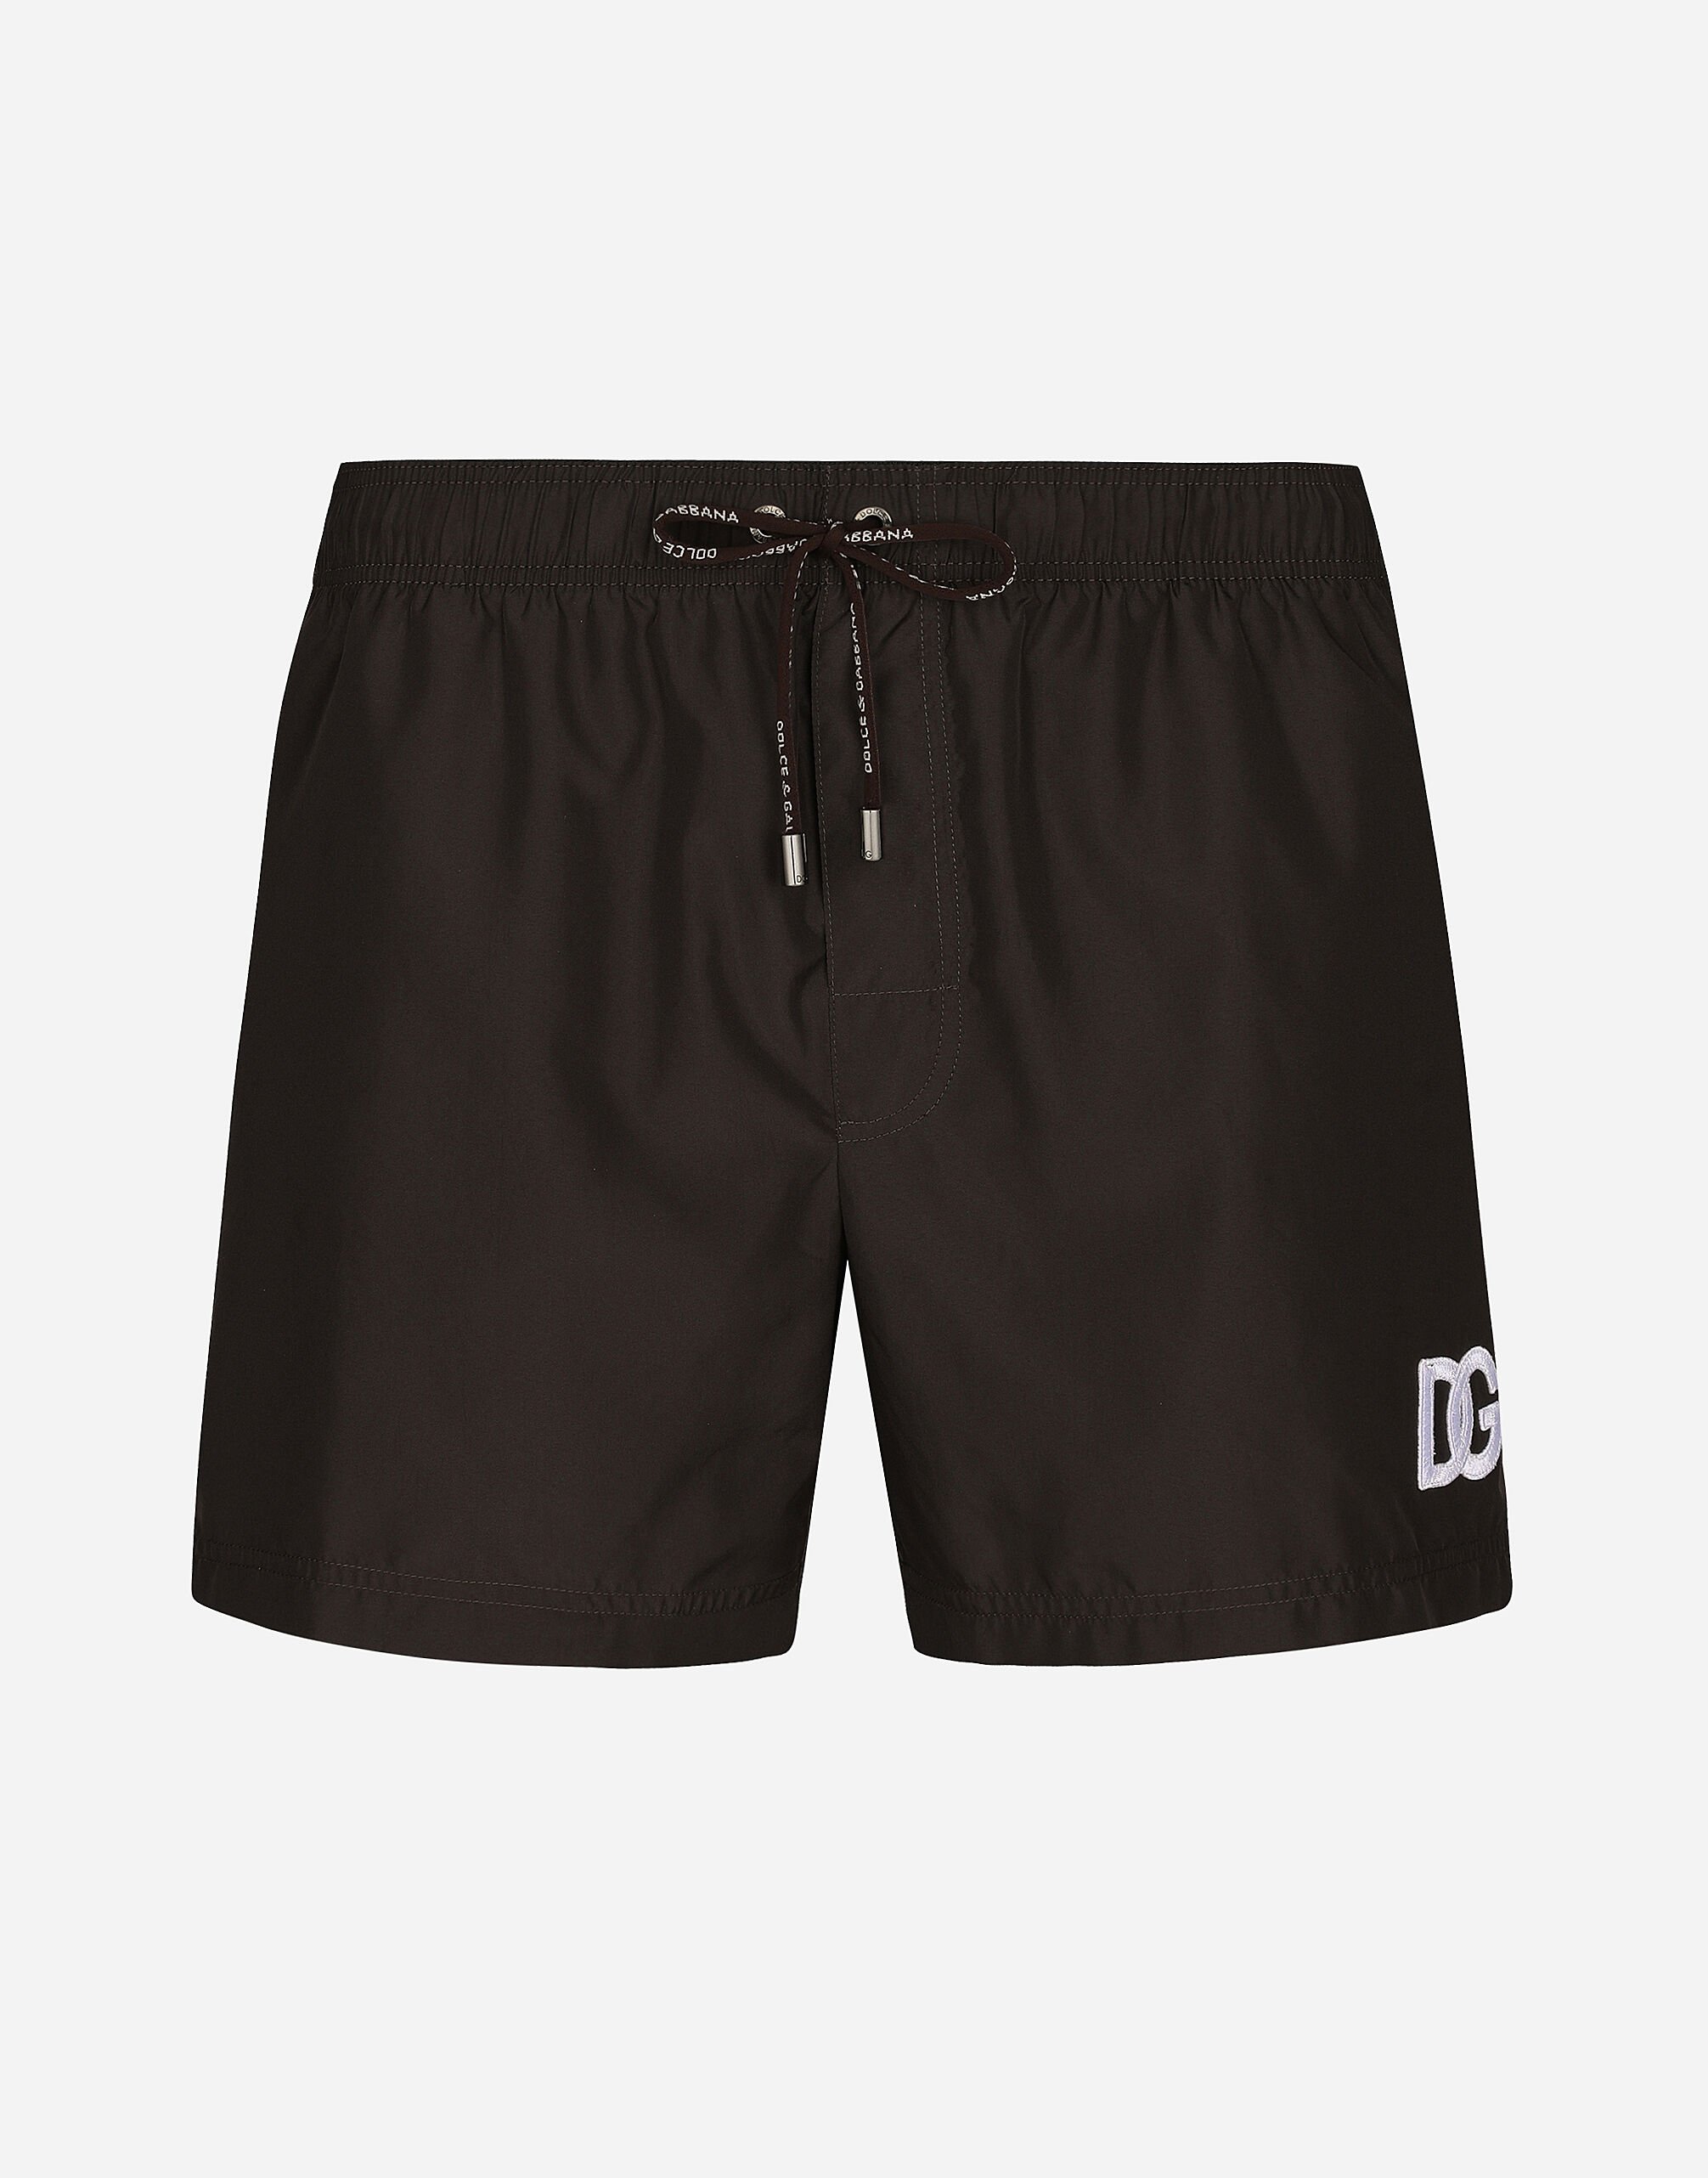 Dolce & Gabbana Short swim trunks with DG logo patch Multicolor M4A06TISMGJ